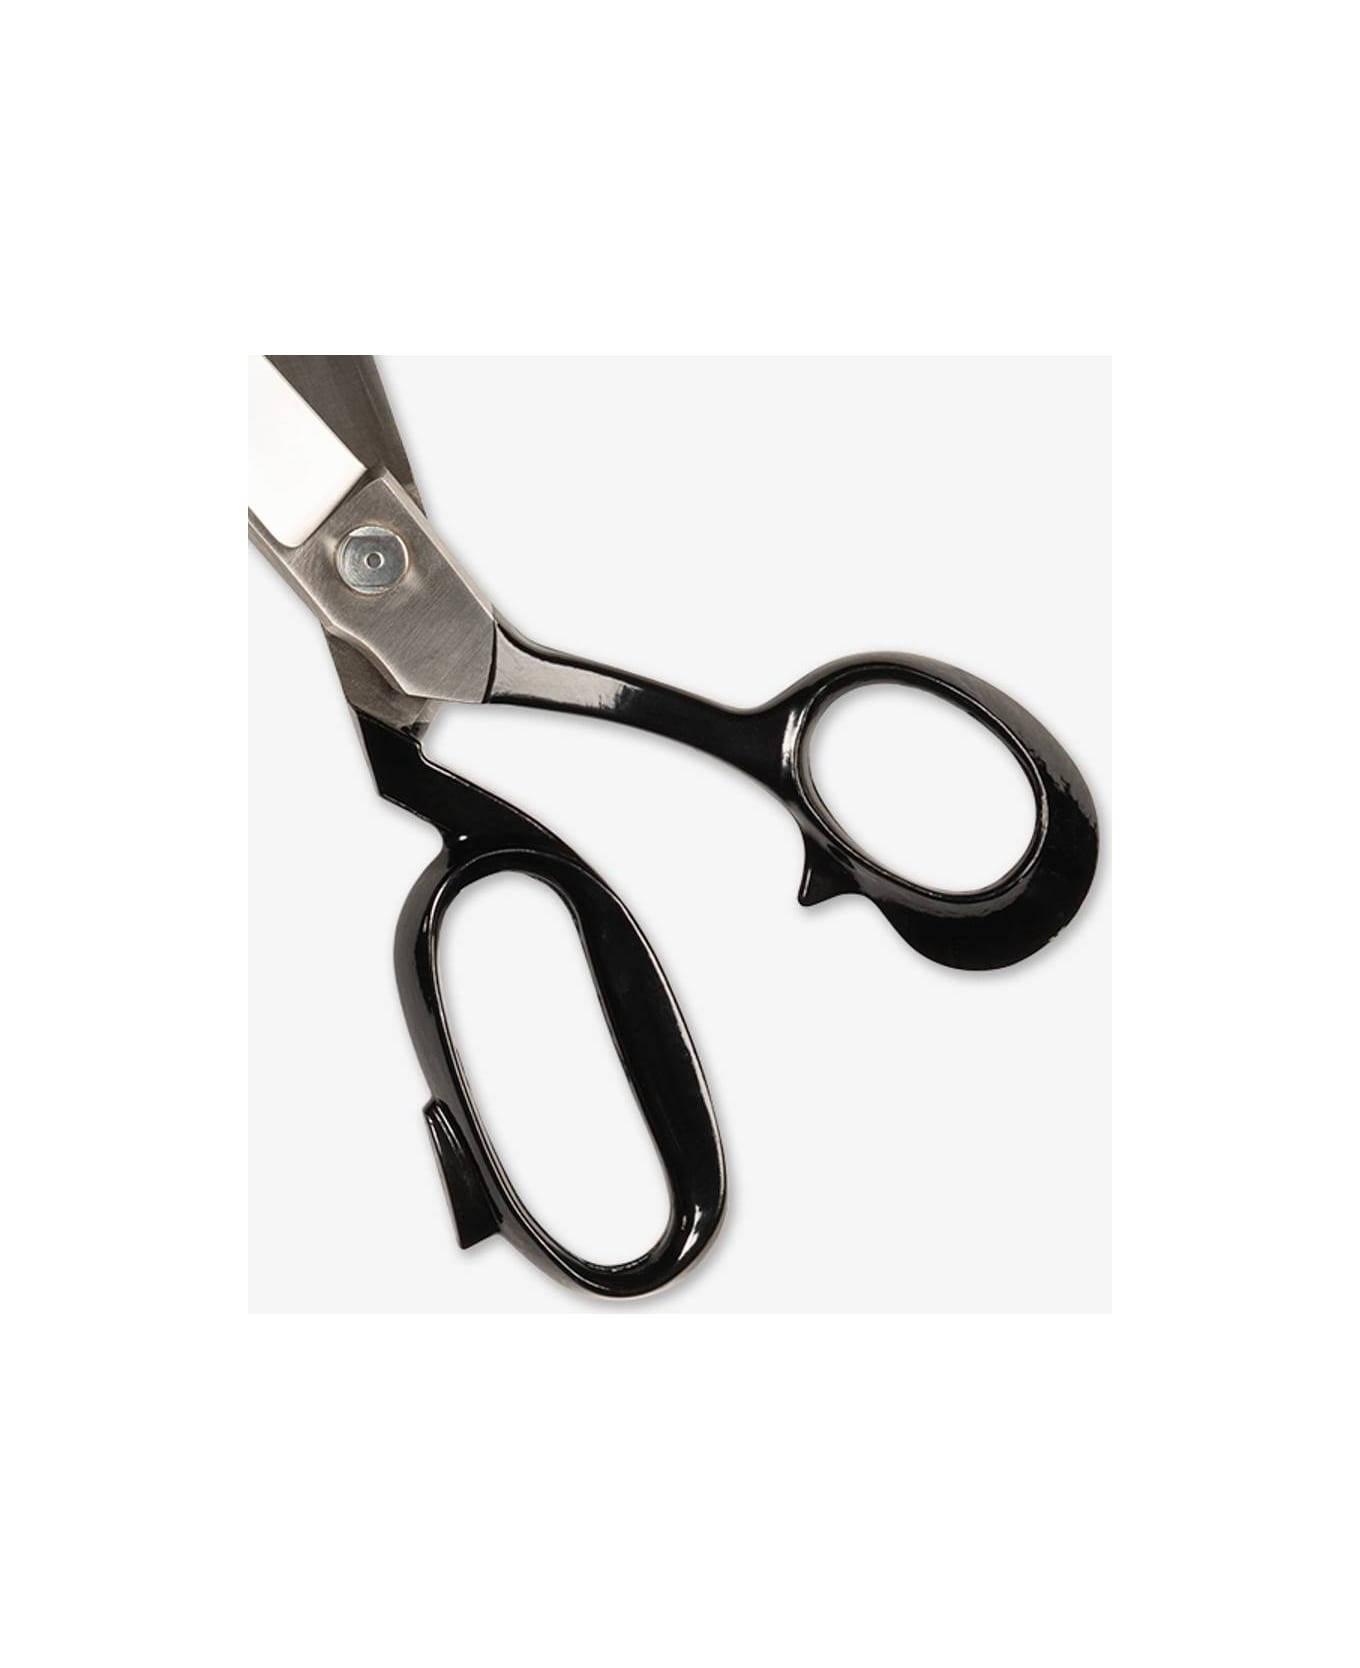 Larusmiani Tailor Scissors  - Neutral